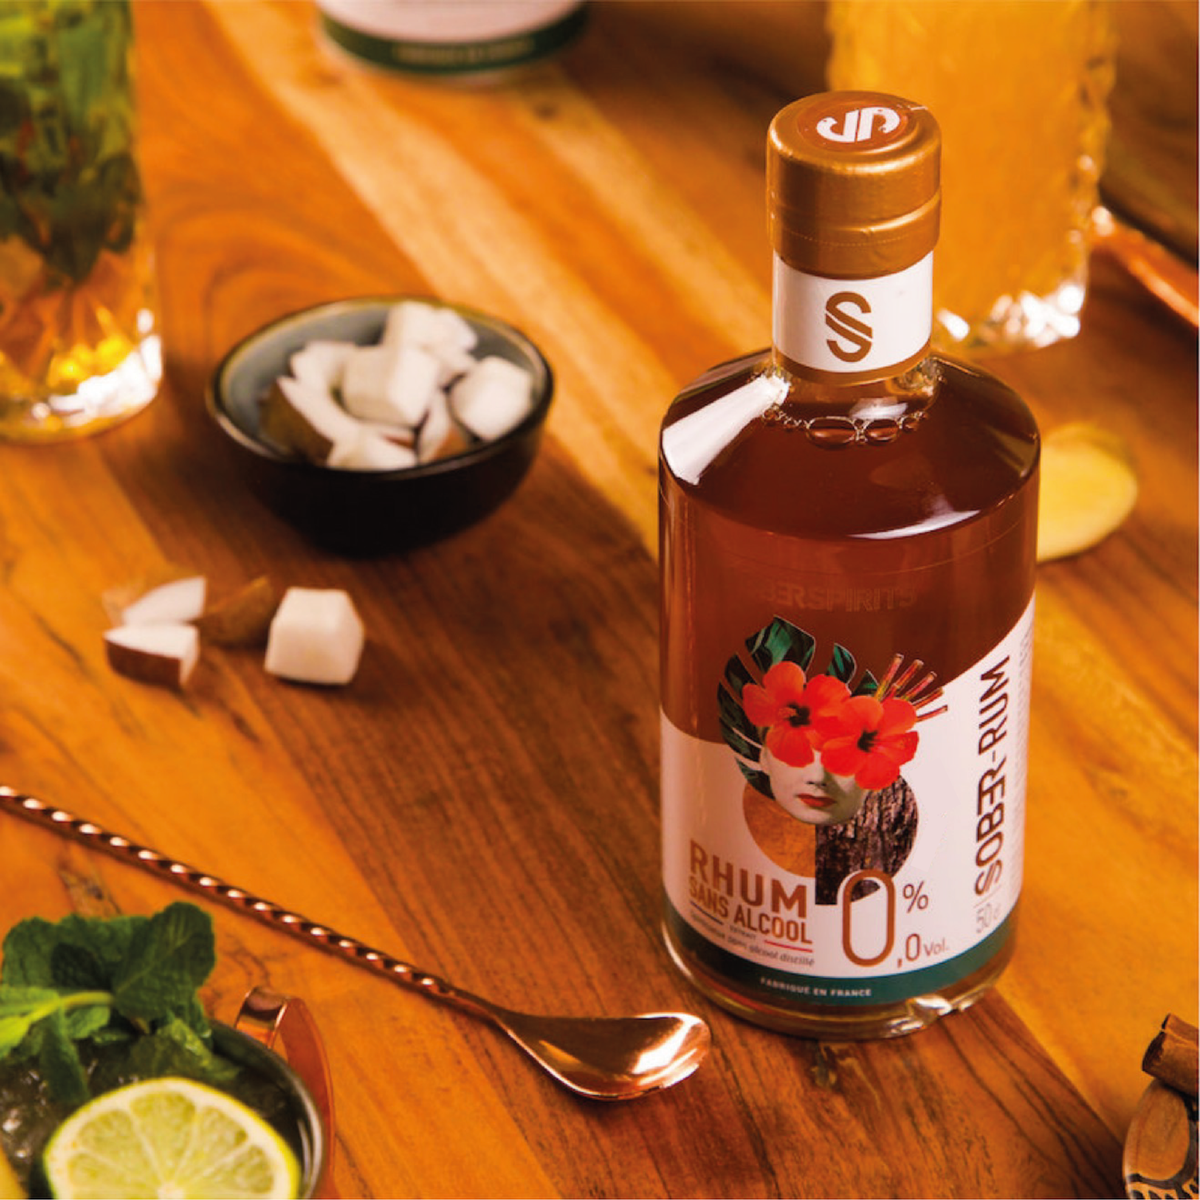 Sober Spirits R 0.0% 500ml - Rum alternative